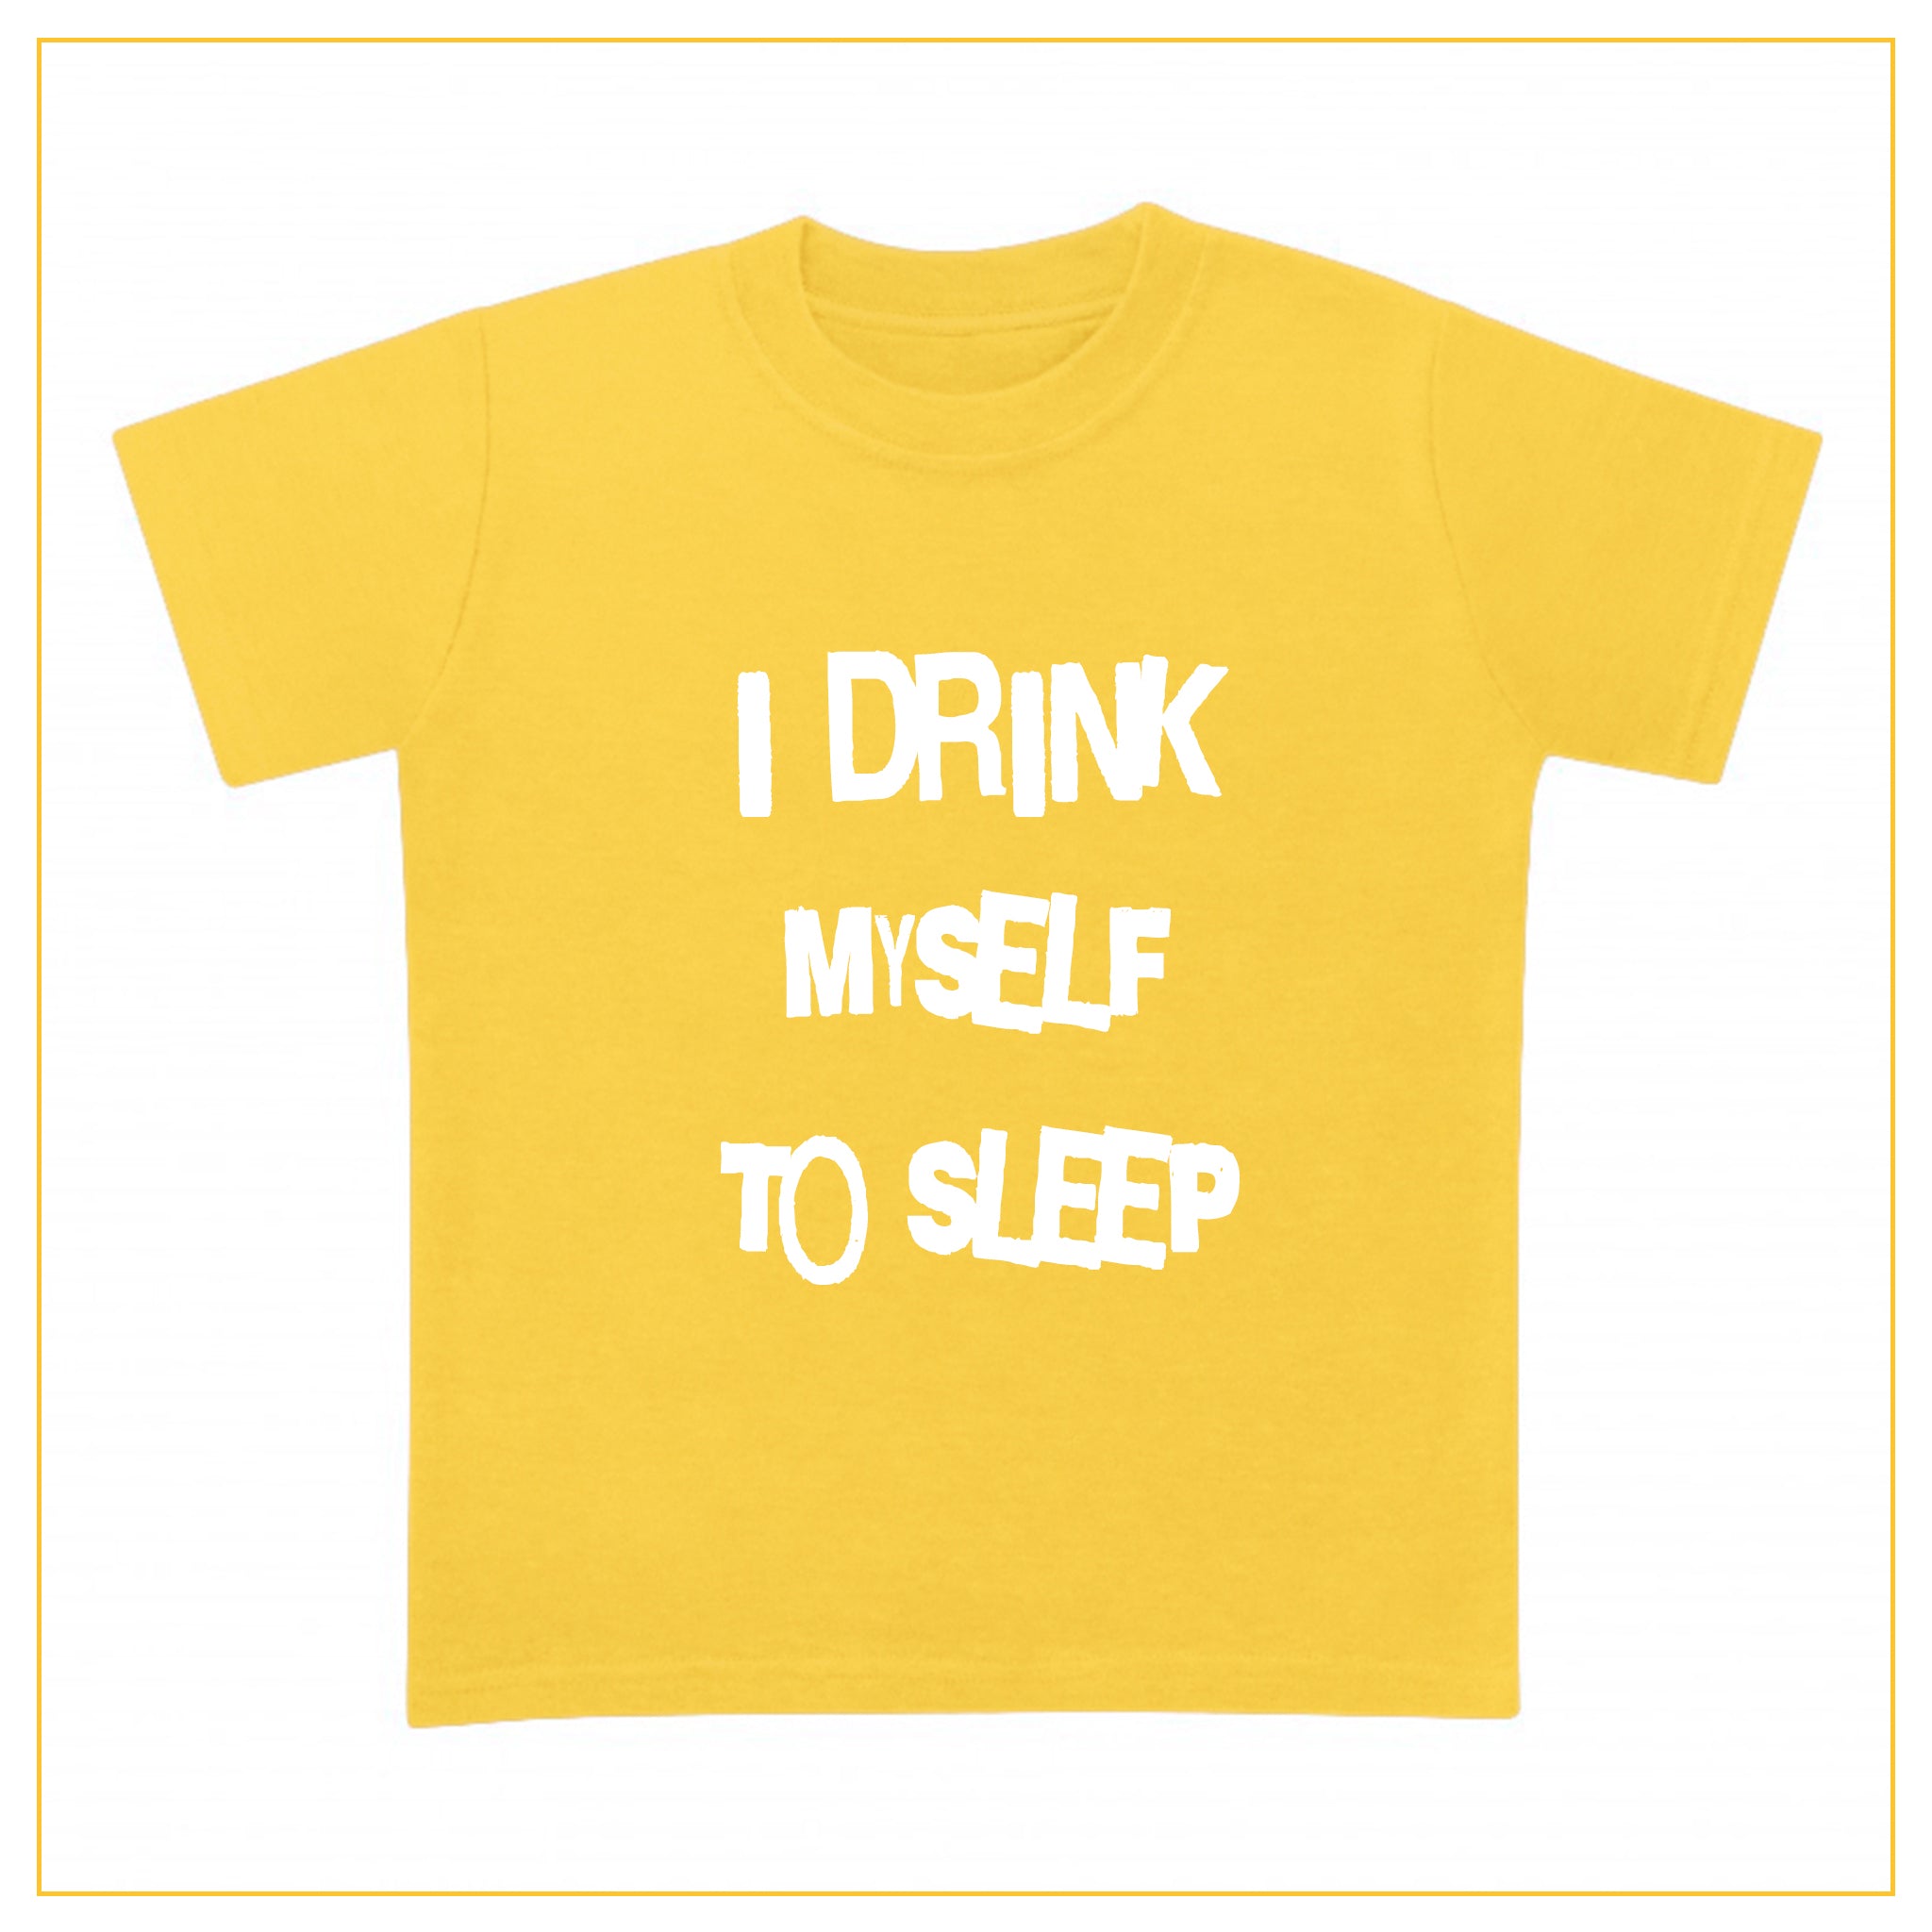 I drink myself to sleep baby t-shirt in yellow